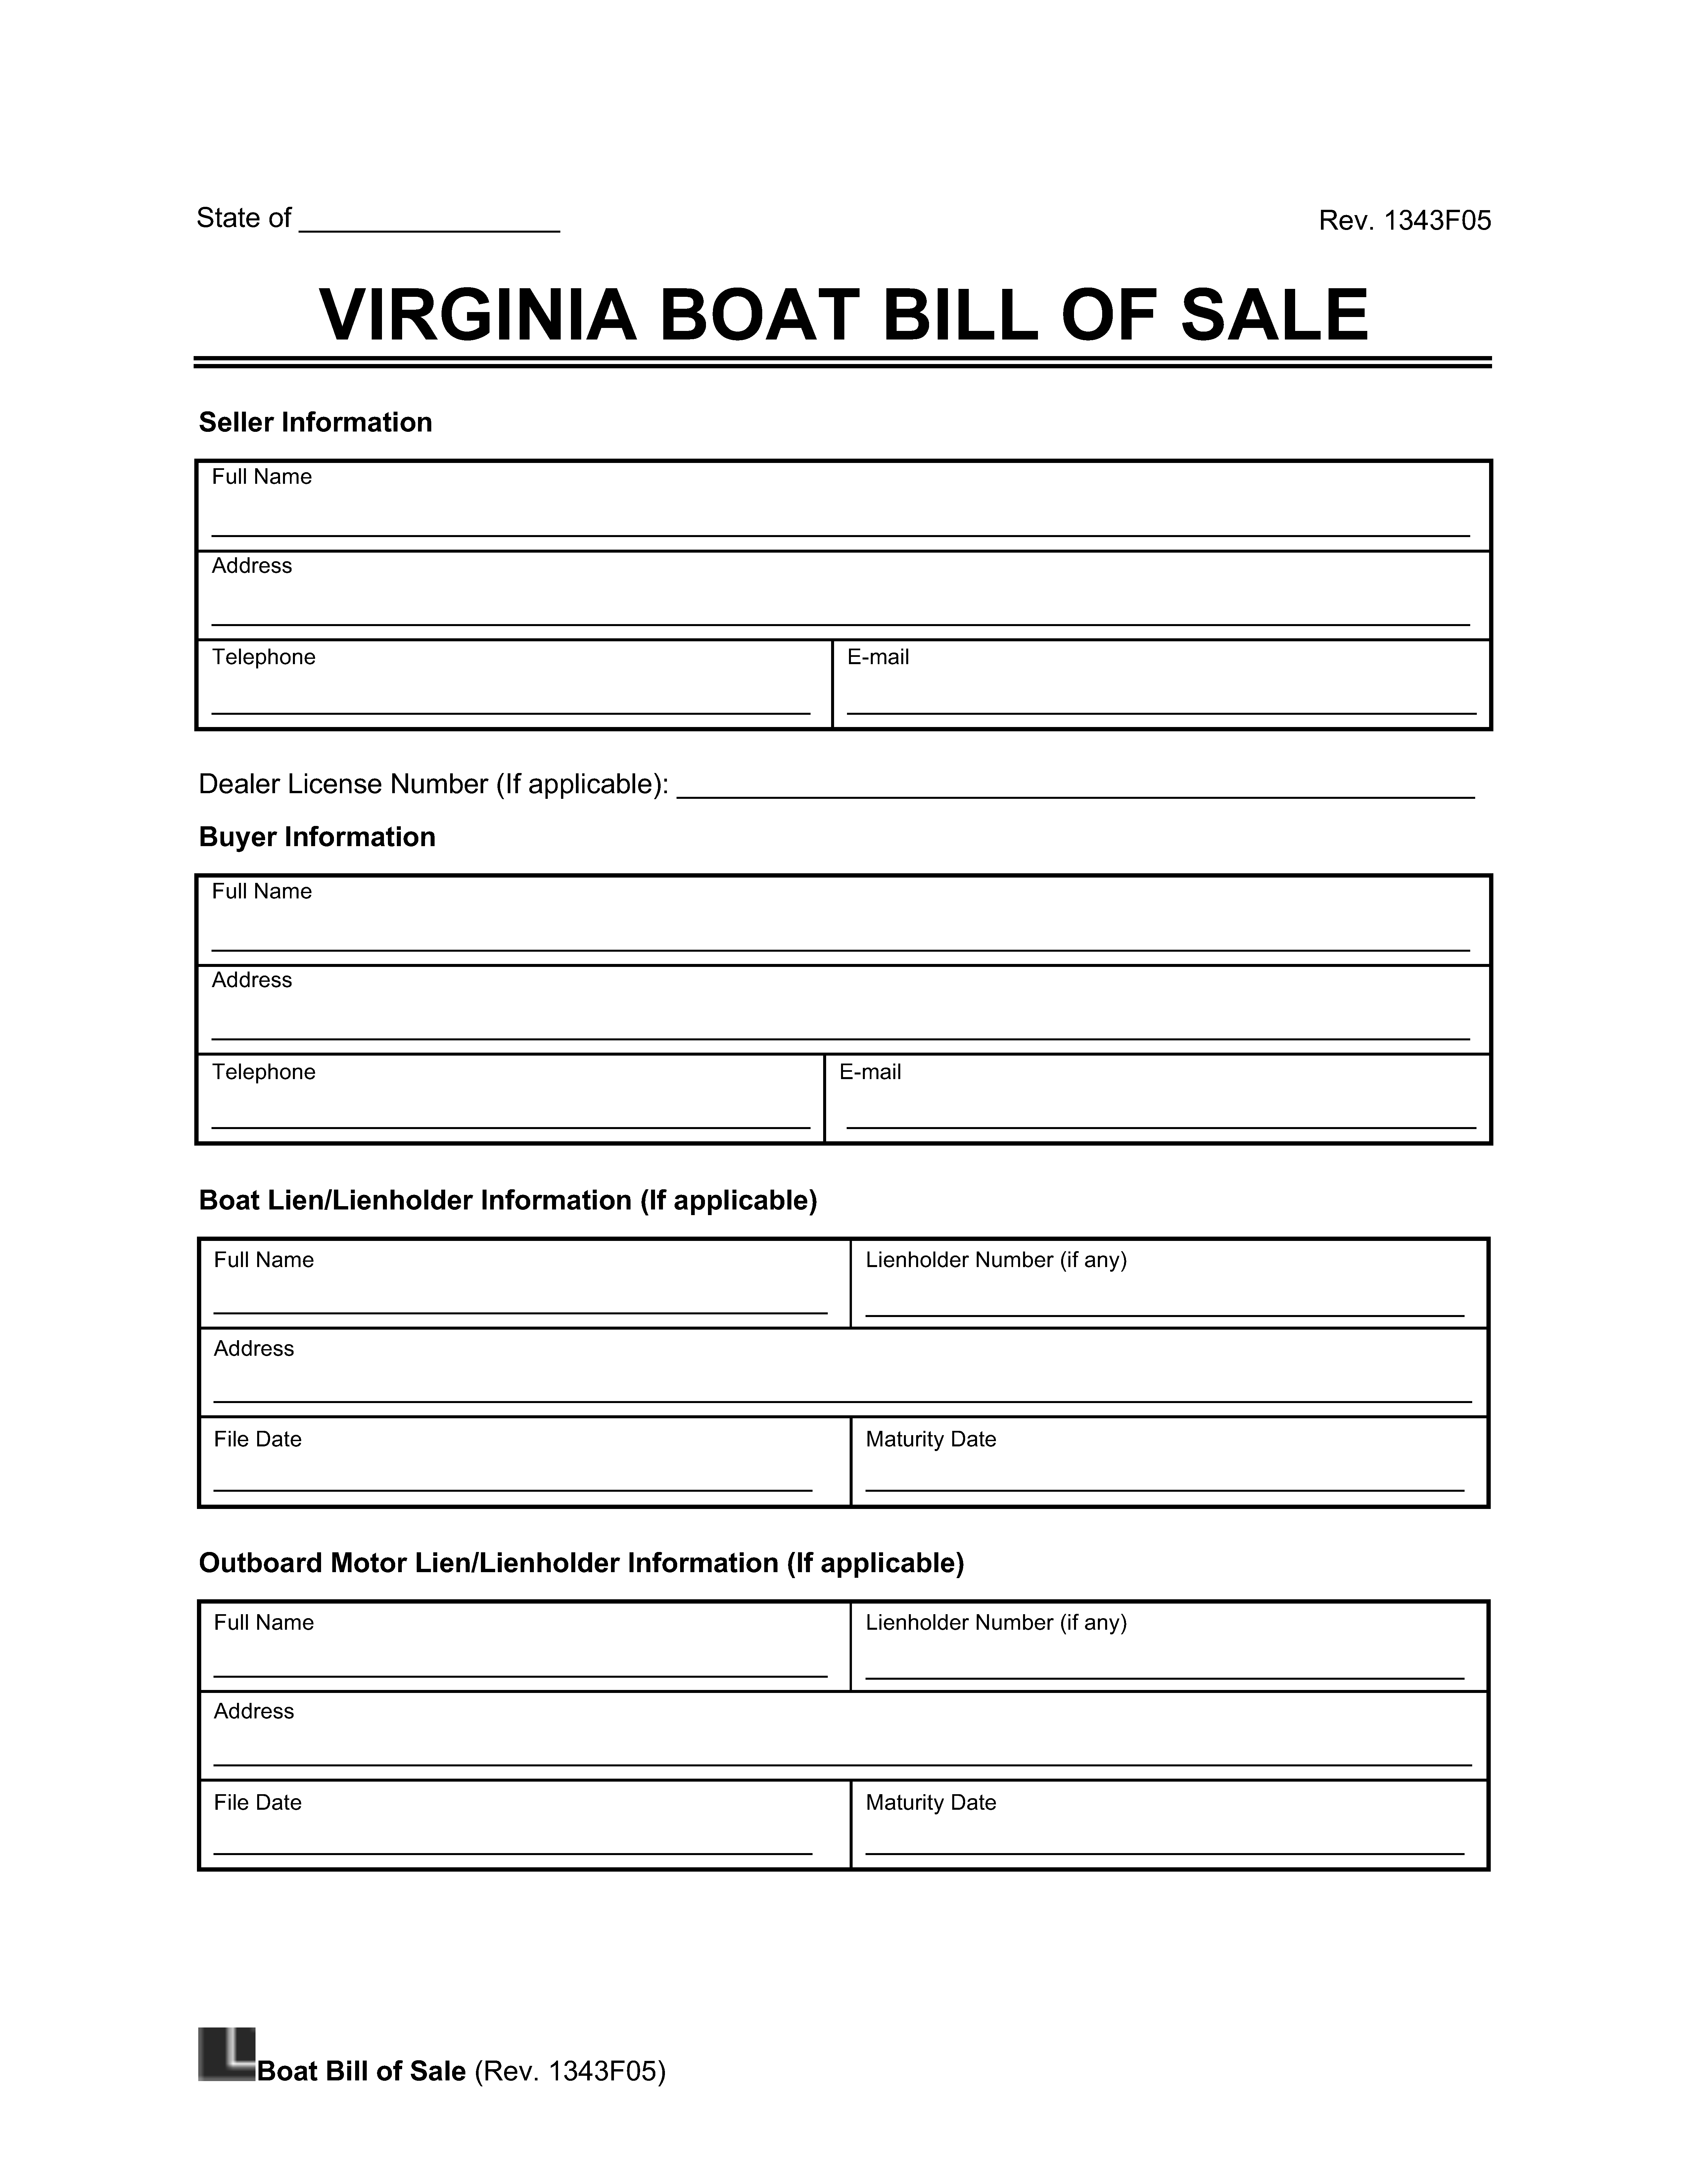 Virginia Boat Bill of Sale screenshot